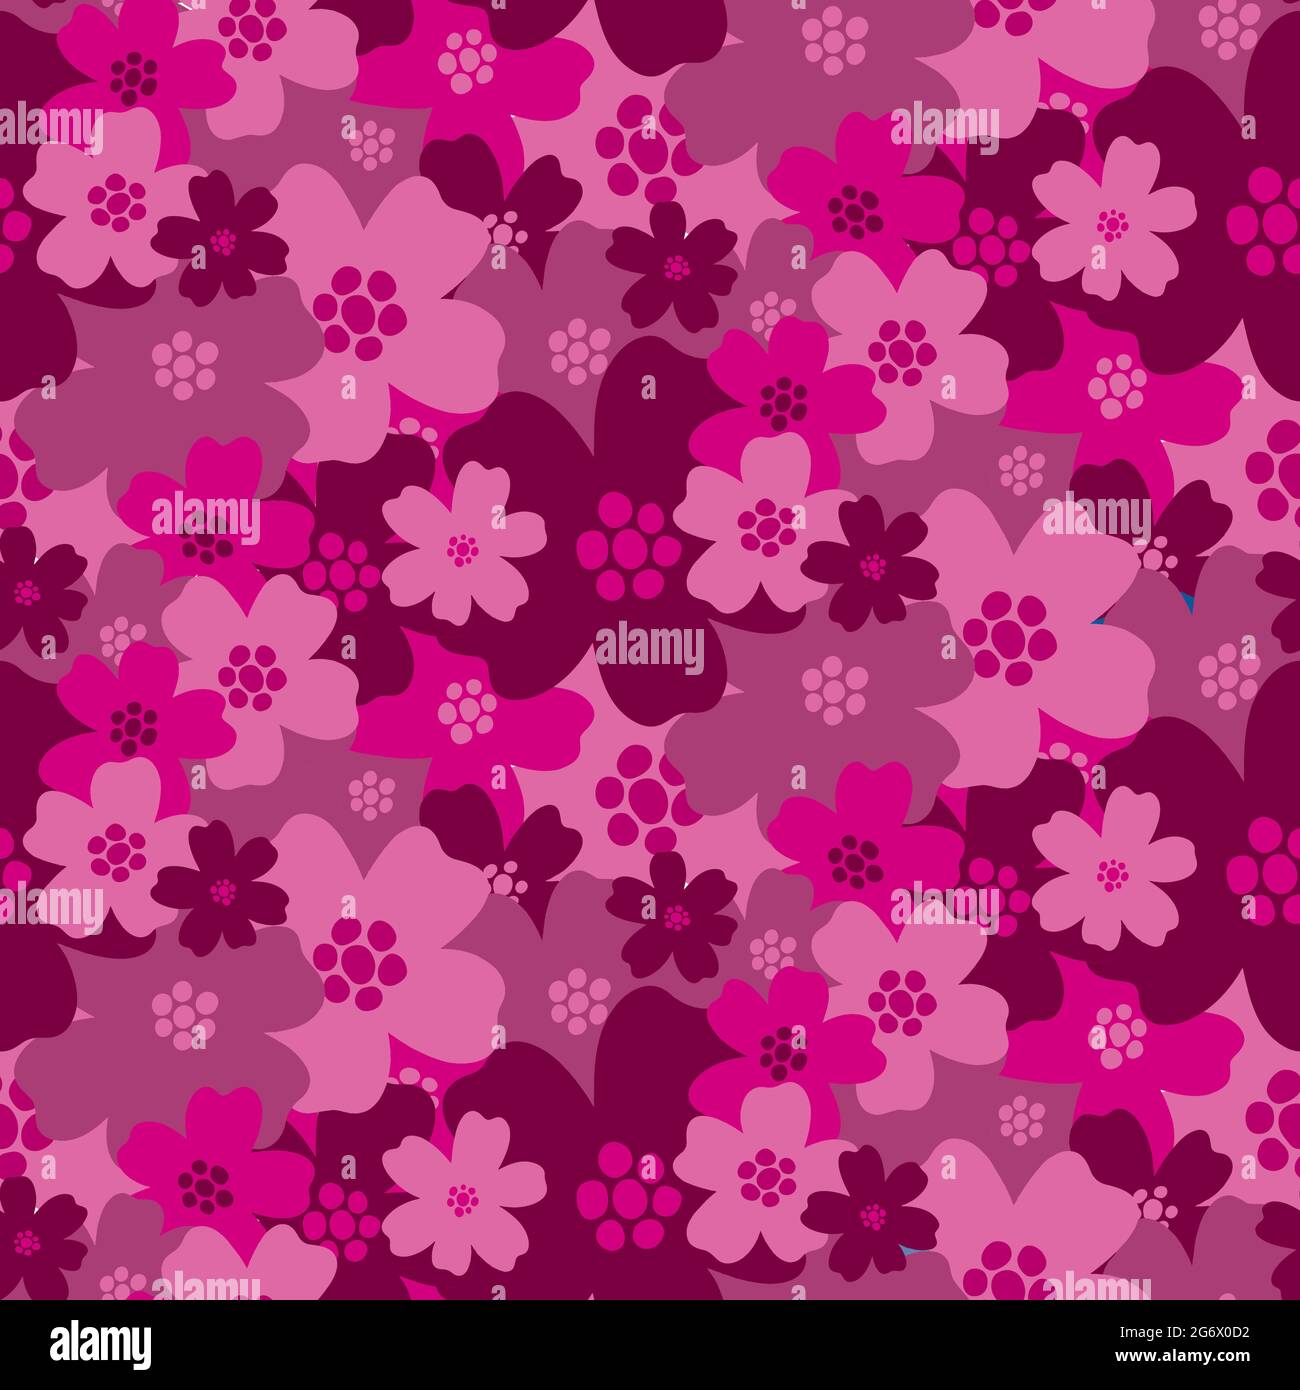 Nahtlose Muster floral Blume abstrakt.Botanical vintage Natur Hintergrund.Print Mode Textil. Stock Vektor